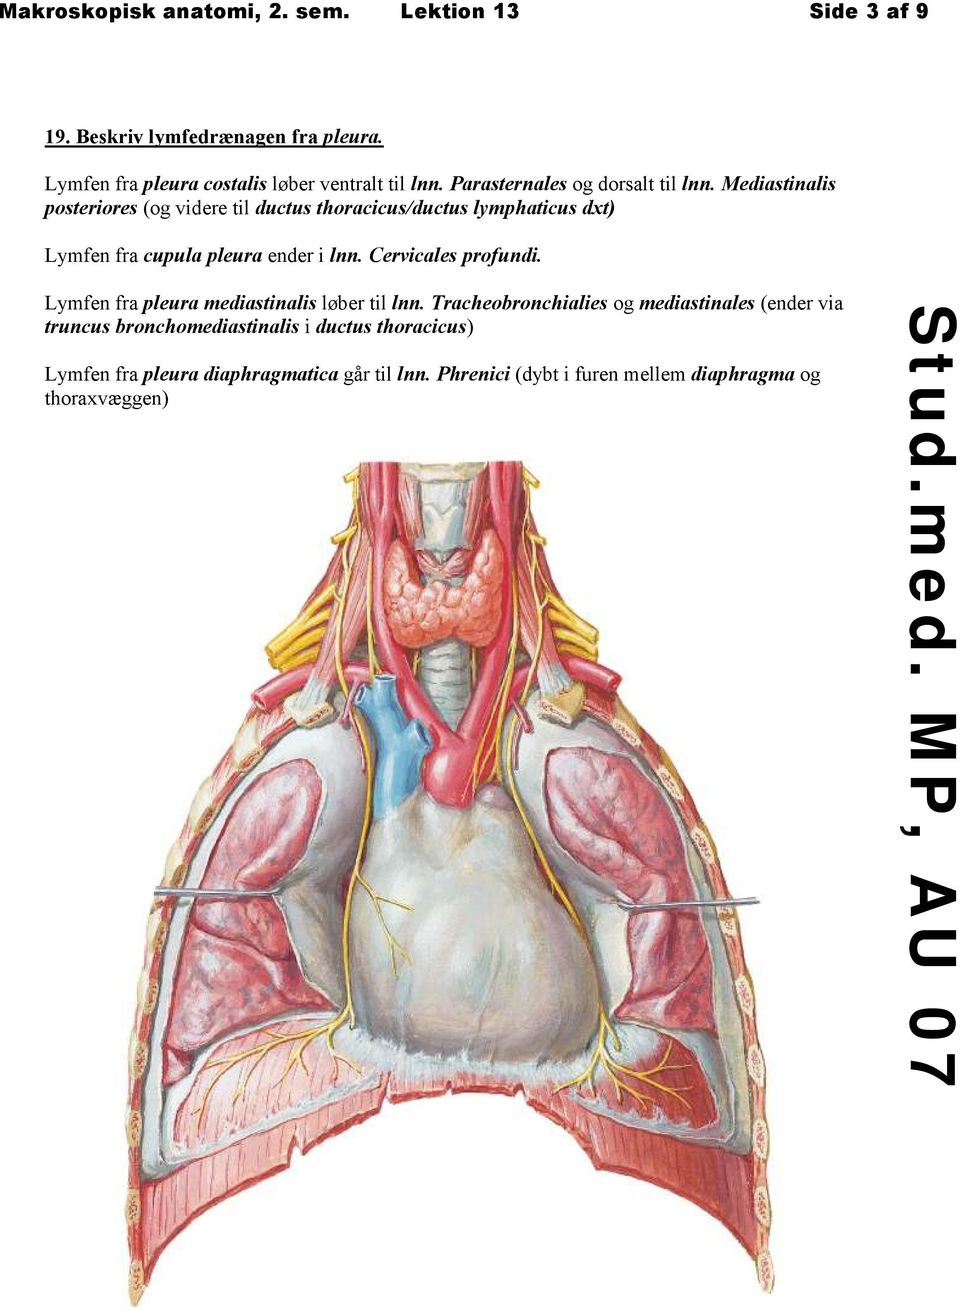 Mediastinalis posteriores (og videre til ductus thoracicus/ductus lymphaticus dxt) Lymfen fra cupula pleura ender i lnn. Cervicales profundi.